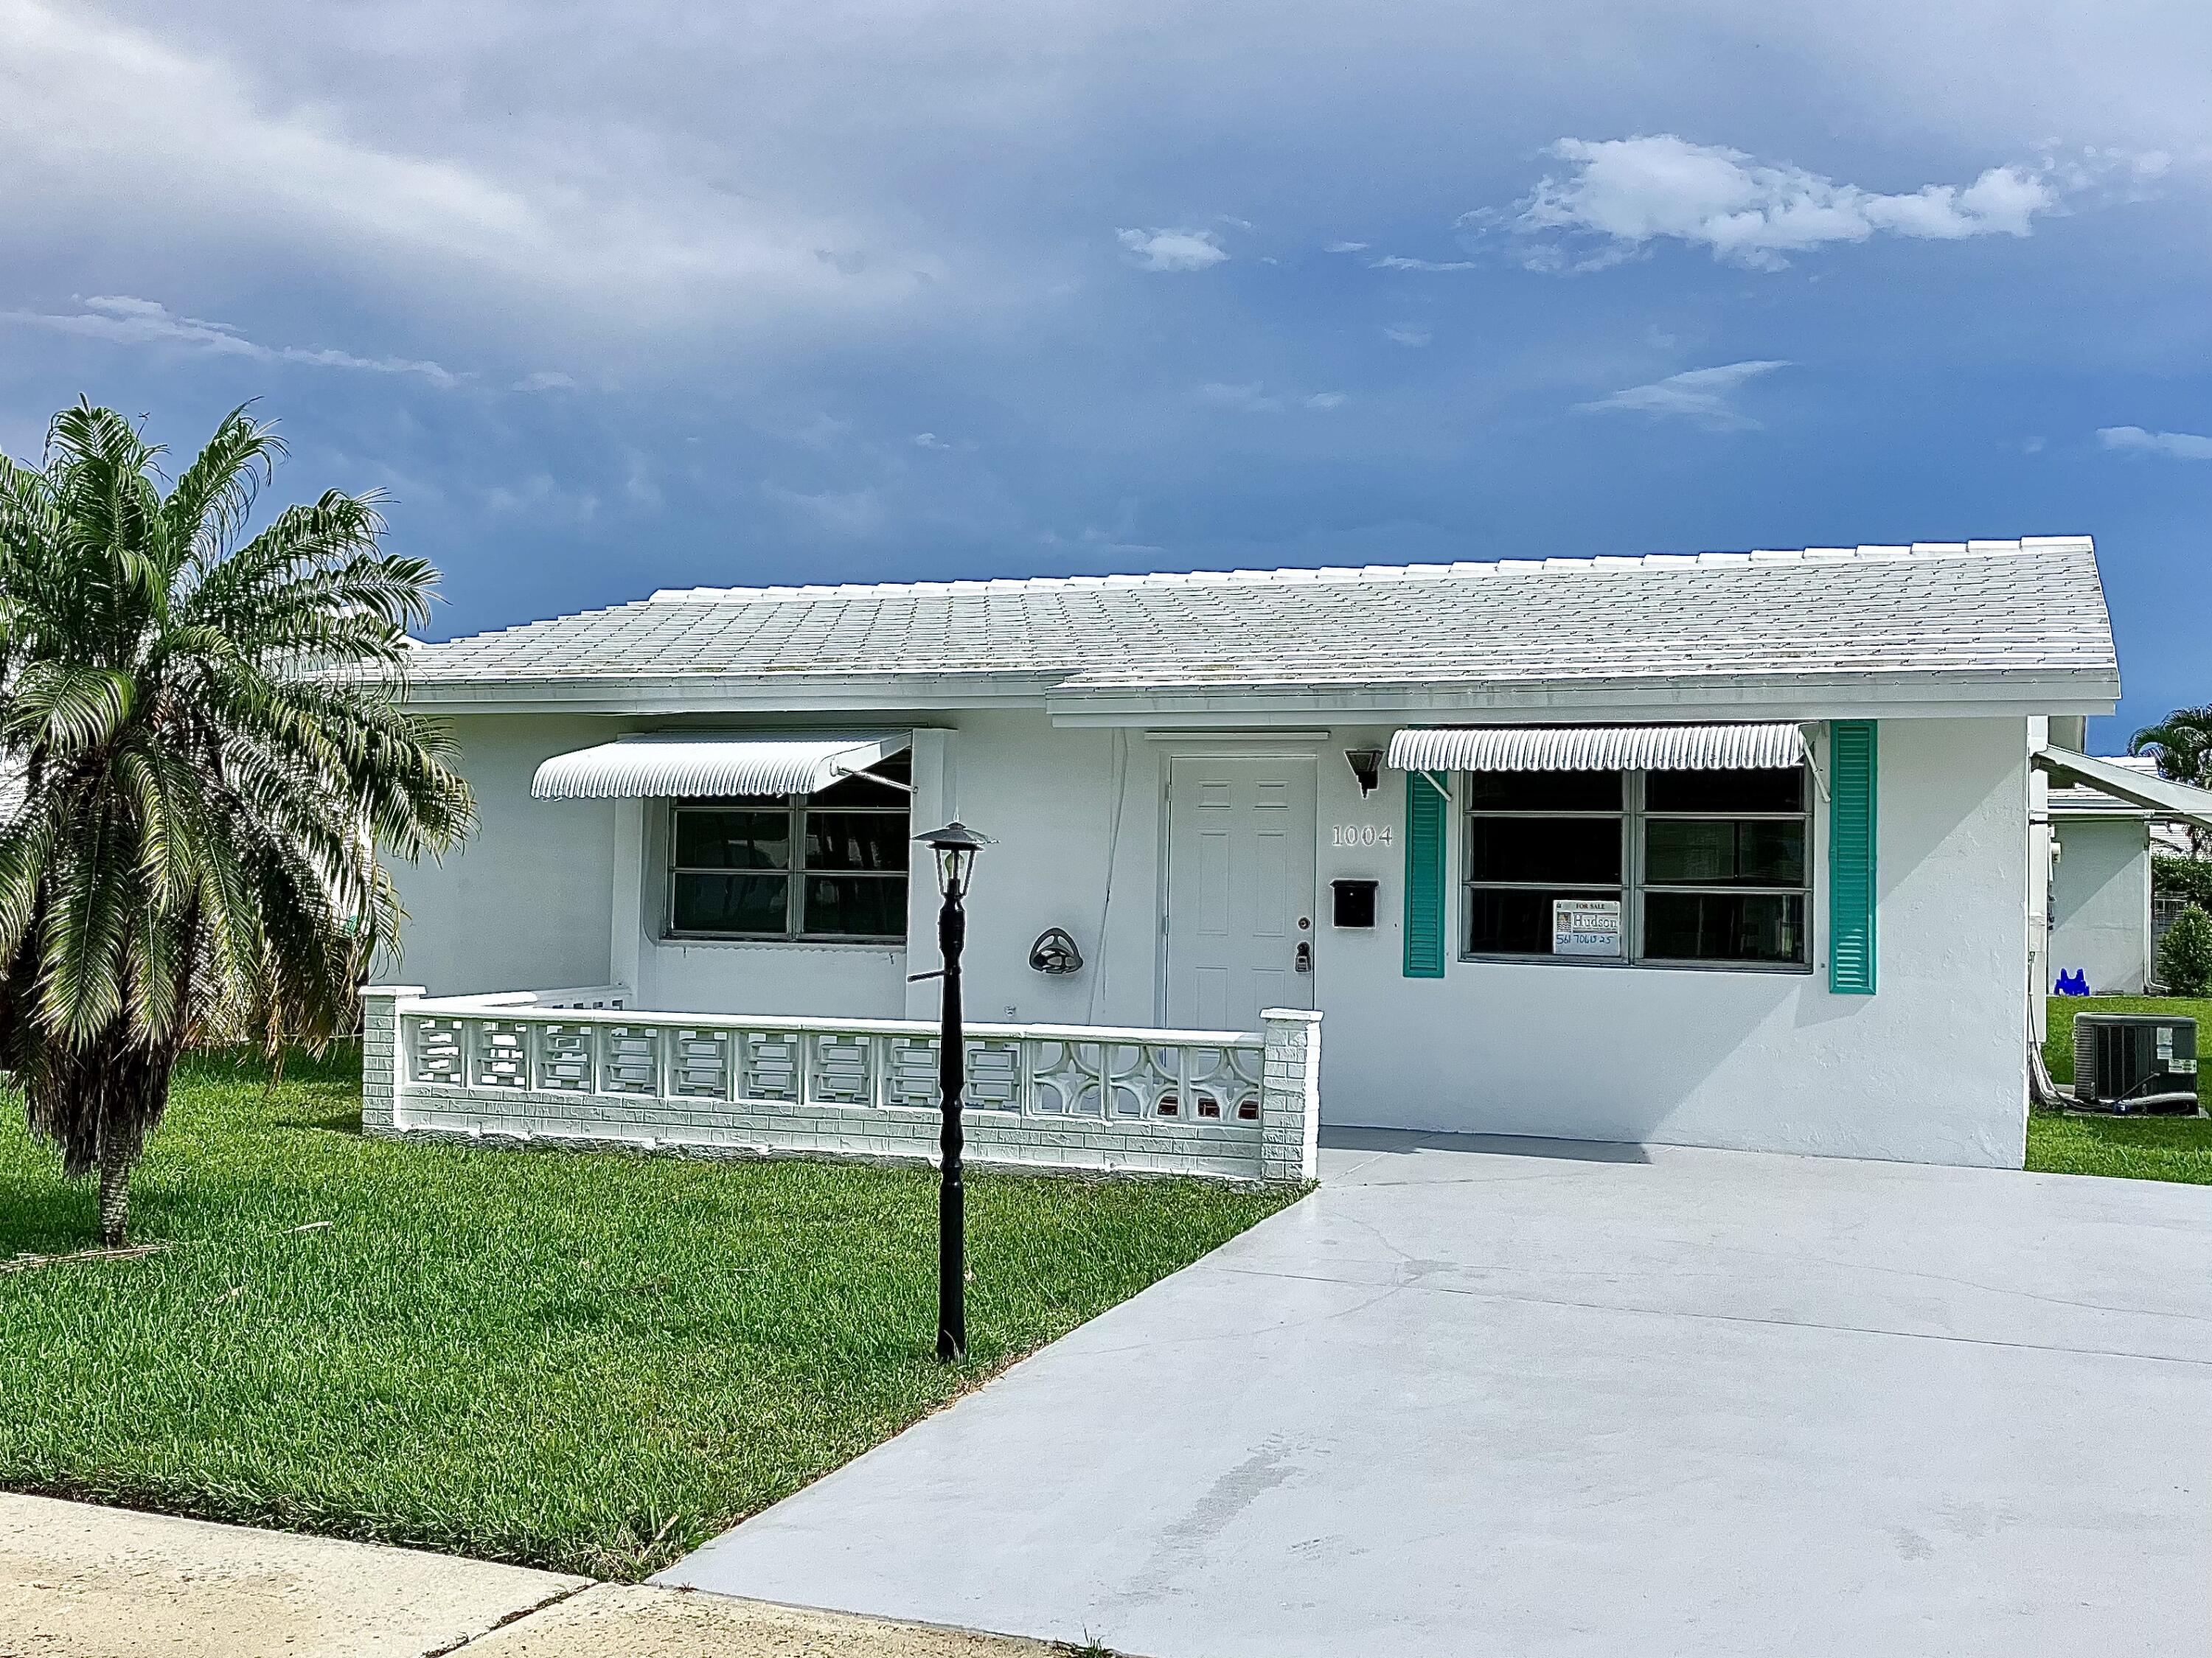 Property for Sale at 1004 Ocean Drive, Boynton Beach, Palm Beach County, Florida - Bedrooms: 2 
Bathrooms: 1  - $229,000